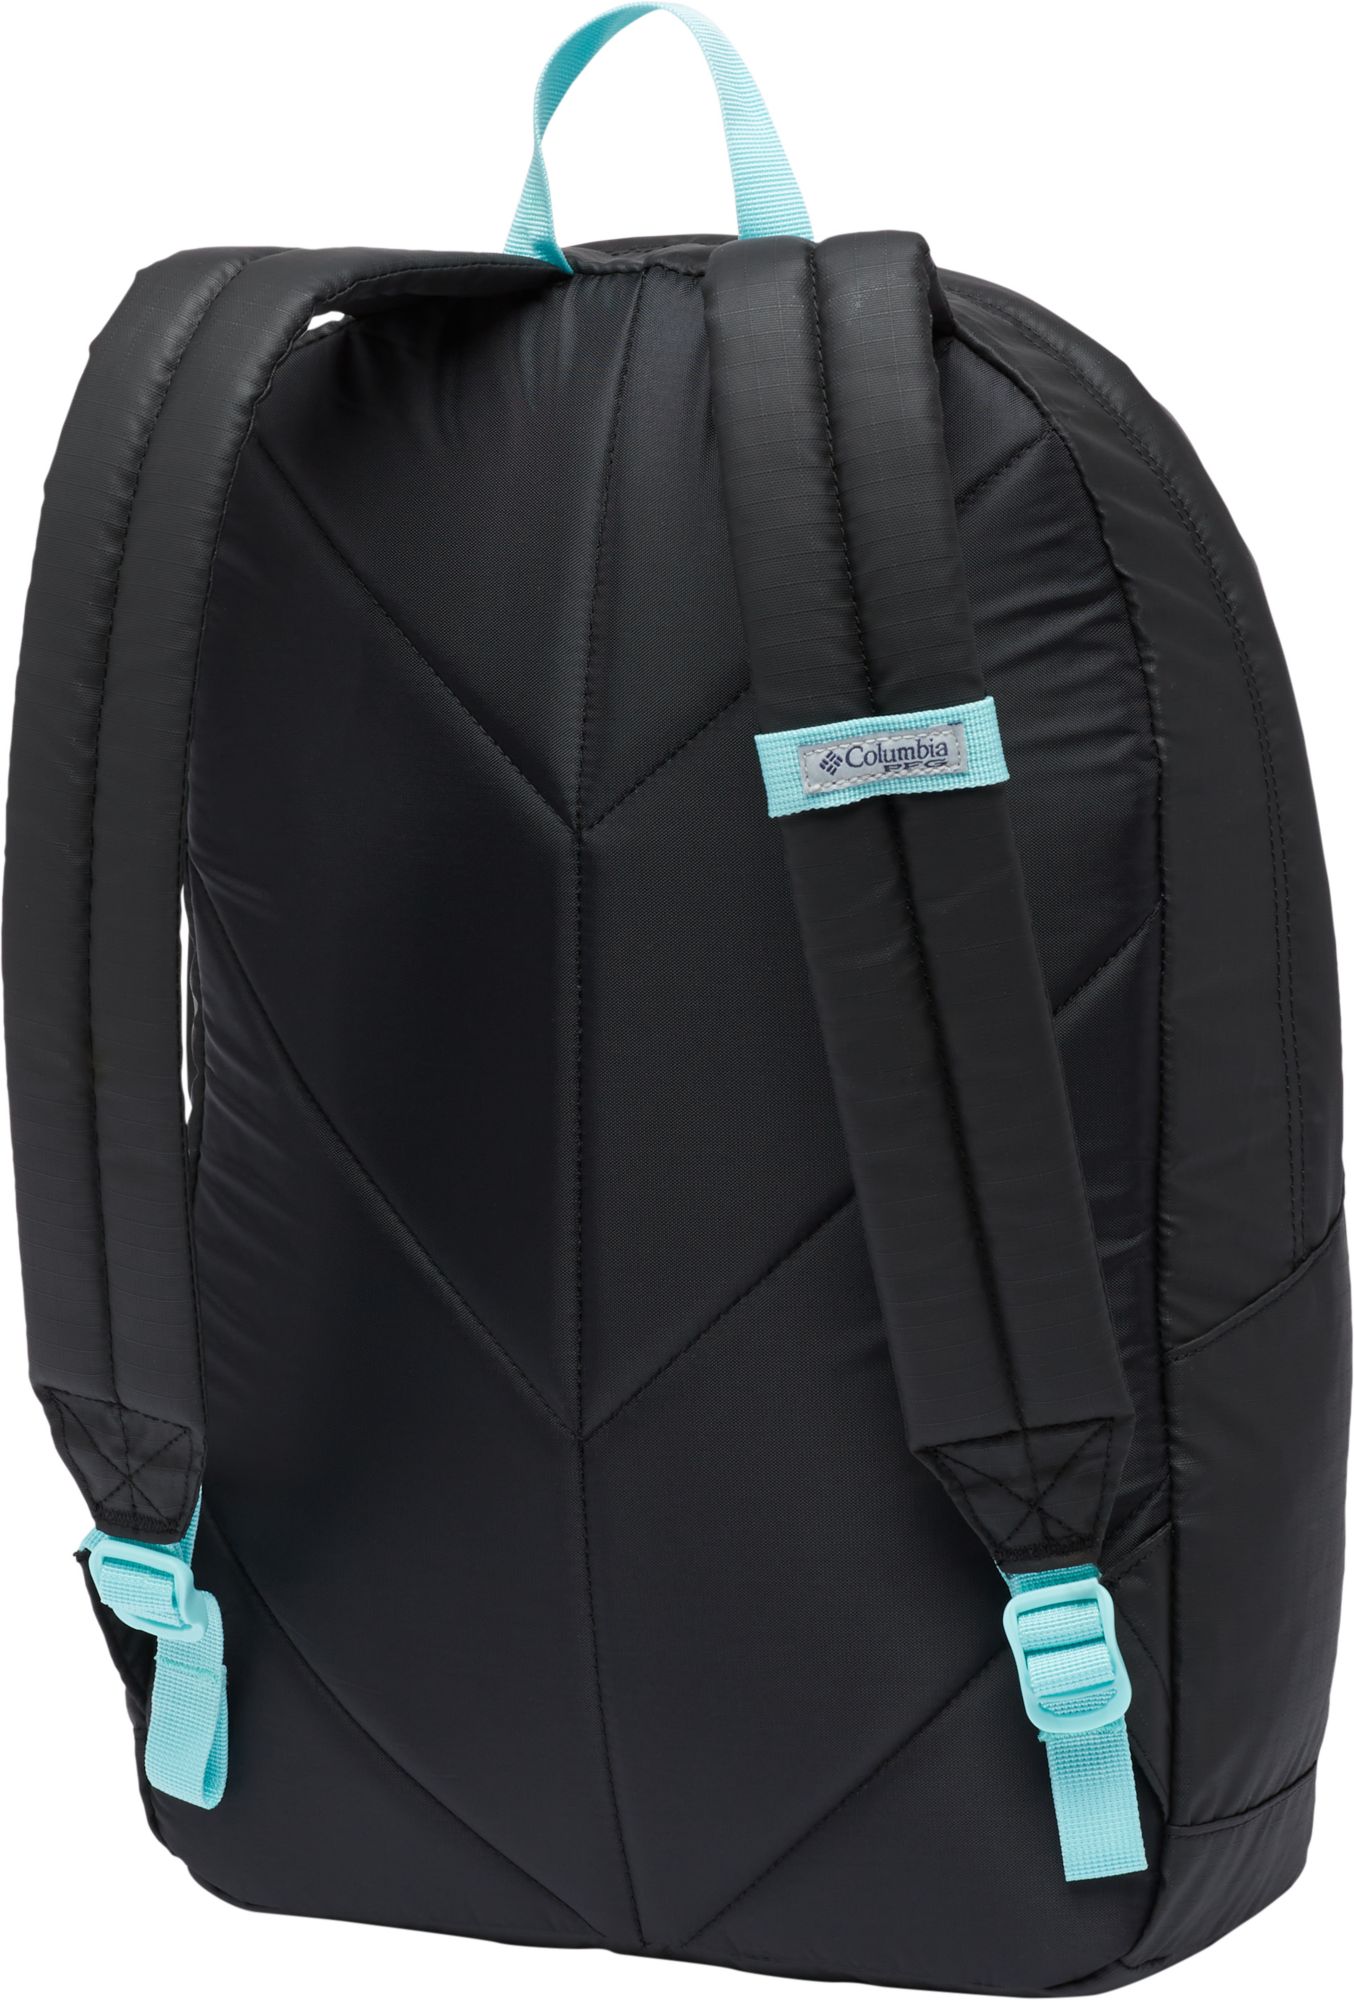 Columbia PFG Zigzag 22L Backpack